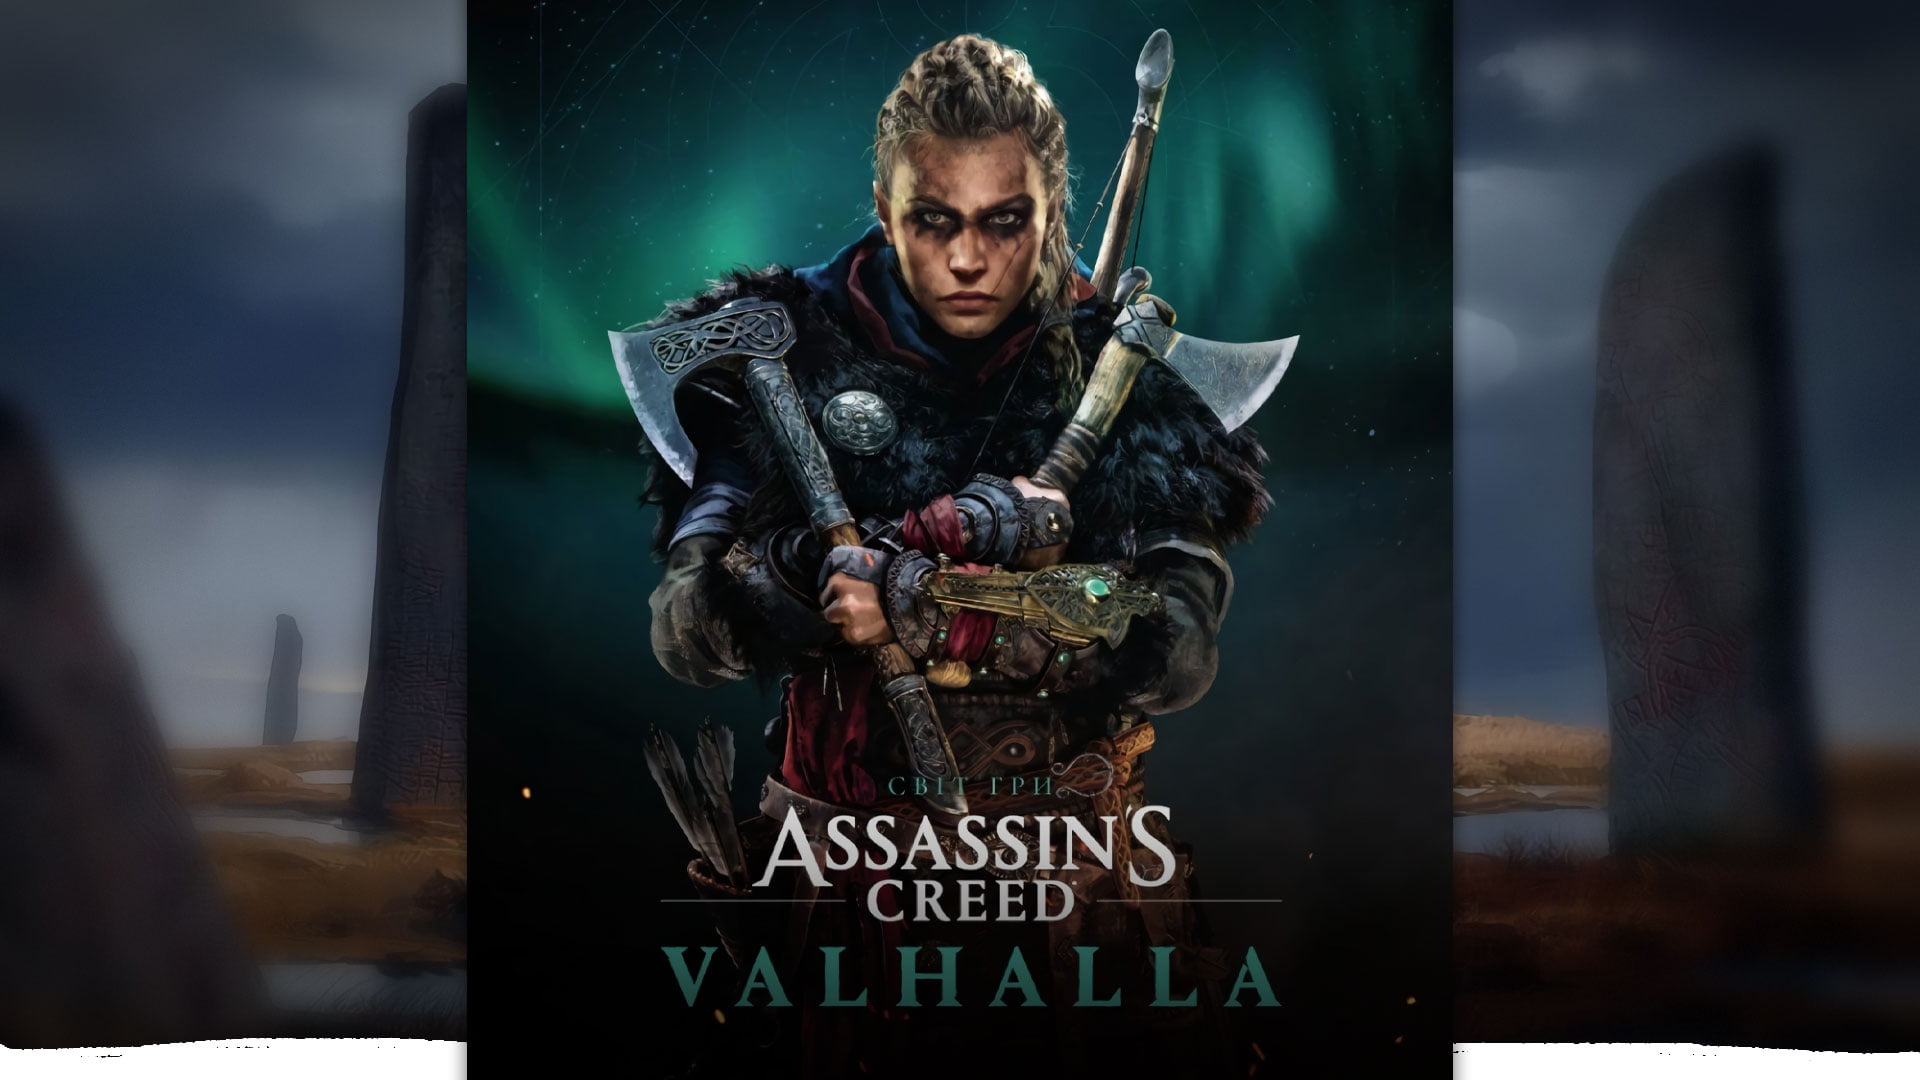 Світ гри Assassin’s Creed Valhalla | артбук